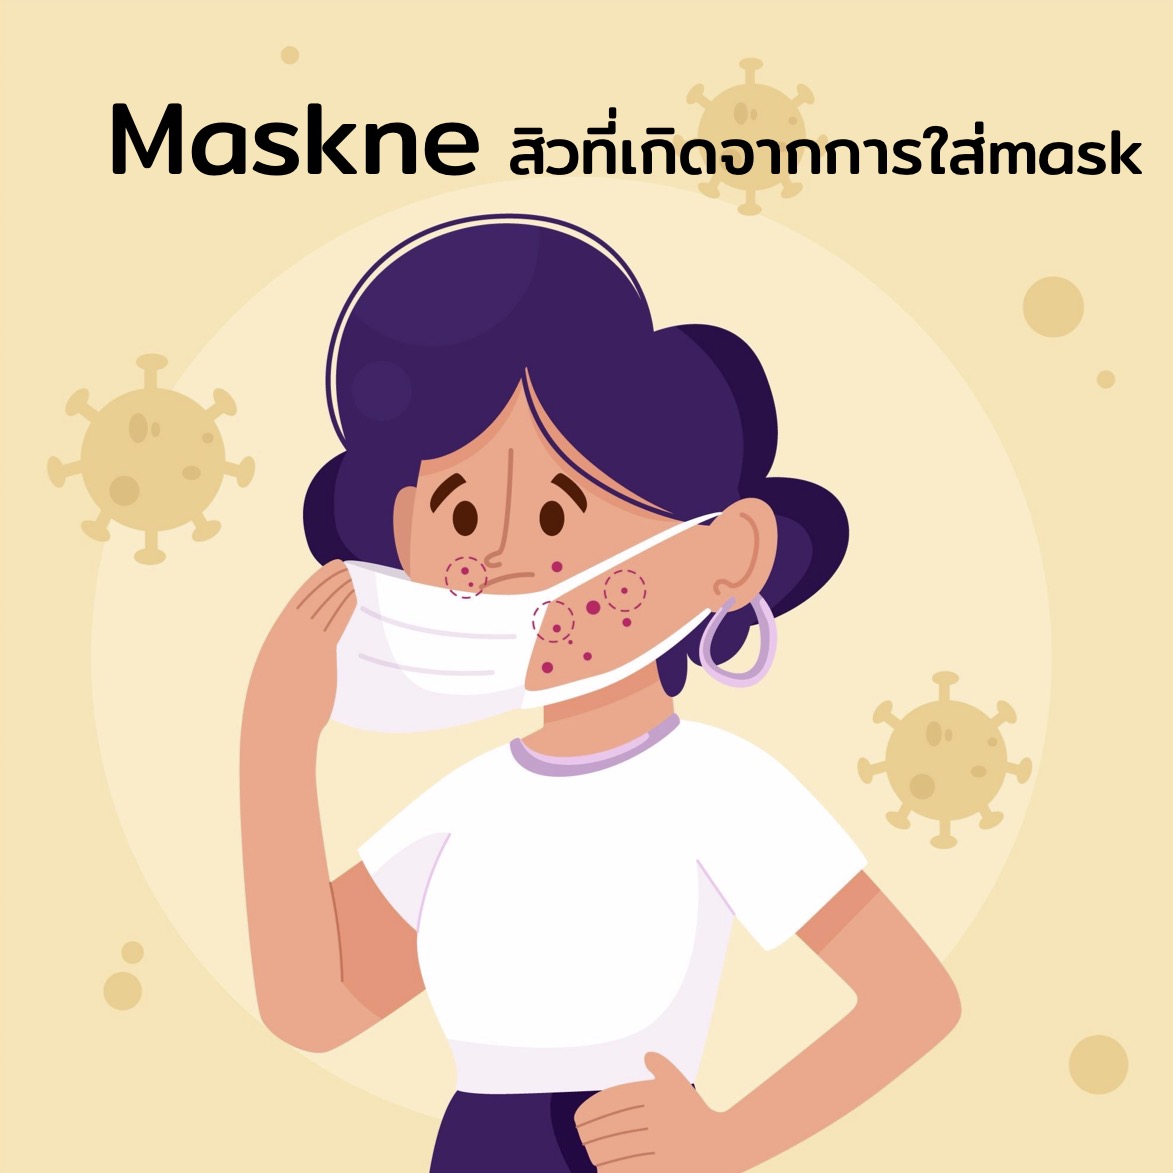 Maskne (Mask acne)